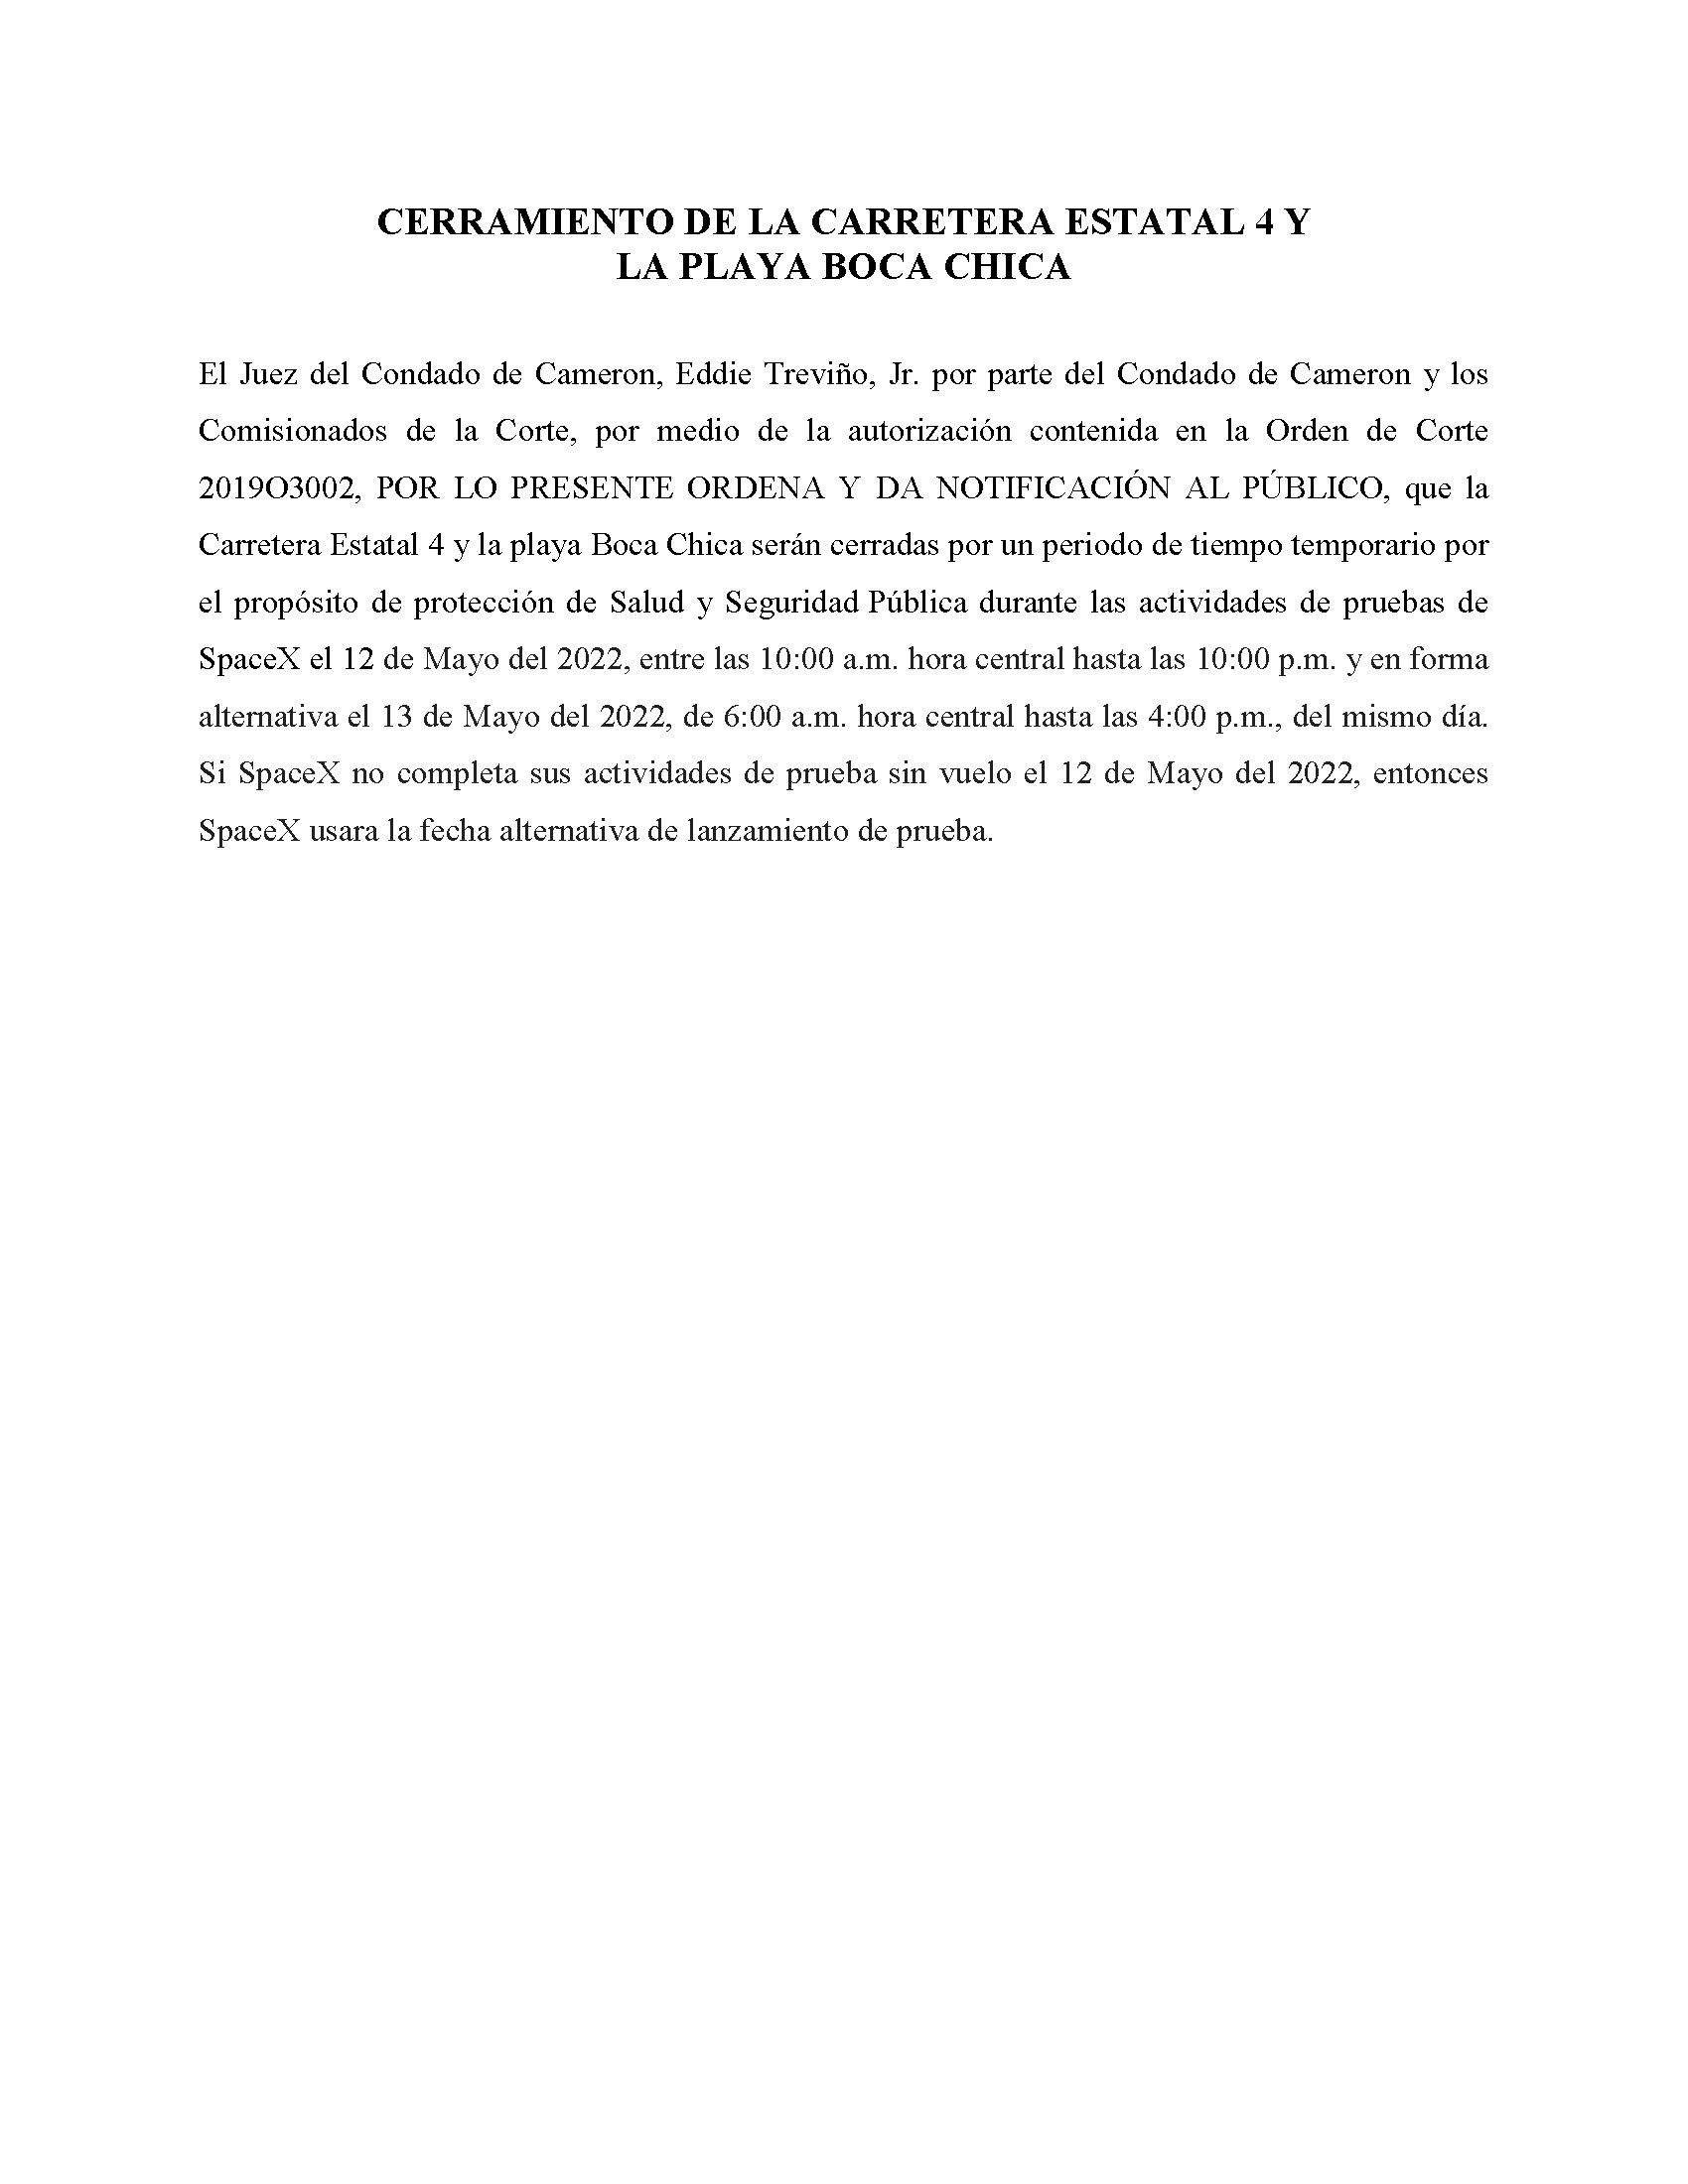 ORDER.CLOSURE OF HIGHWAY 4 Y LA PLAYA BOCA CHICA.SPANISH.05.12.2022